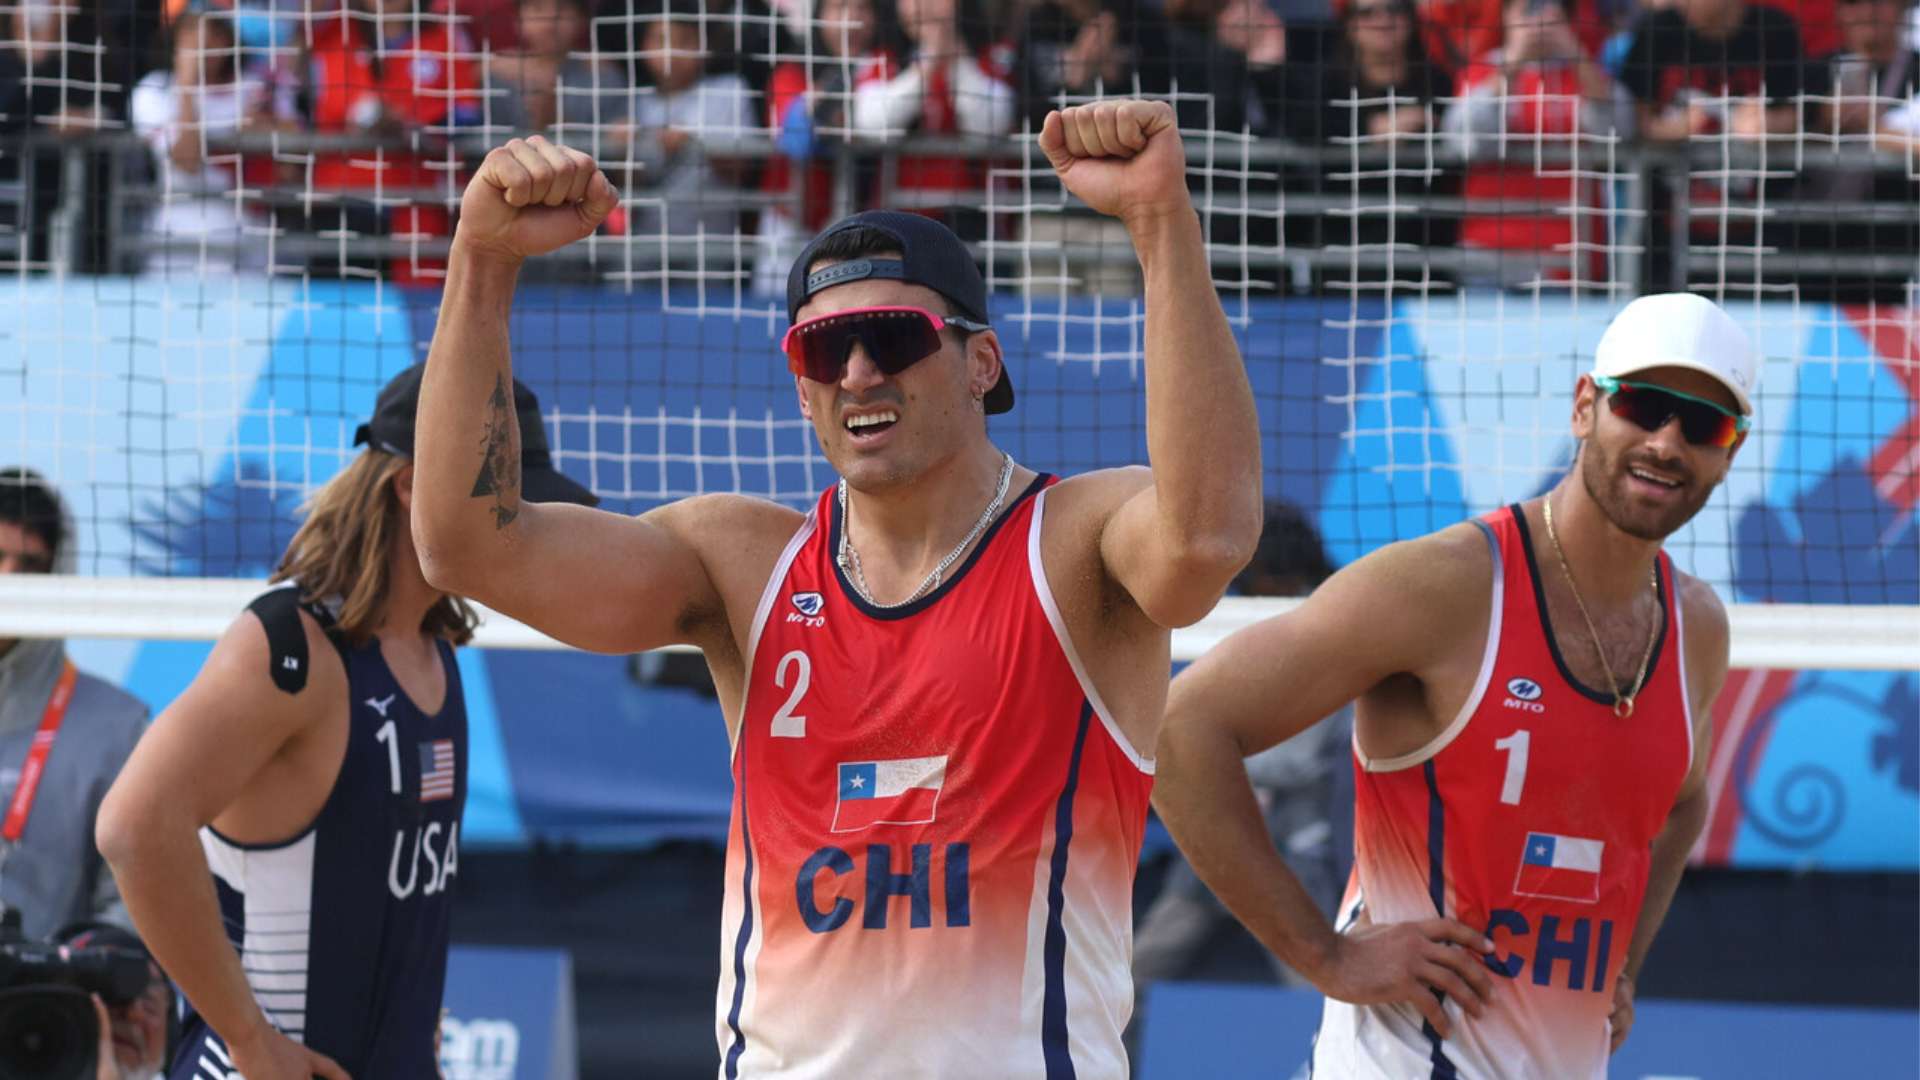 Grimalt cousins secure bronze medal for Chile